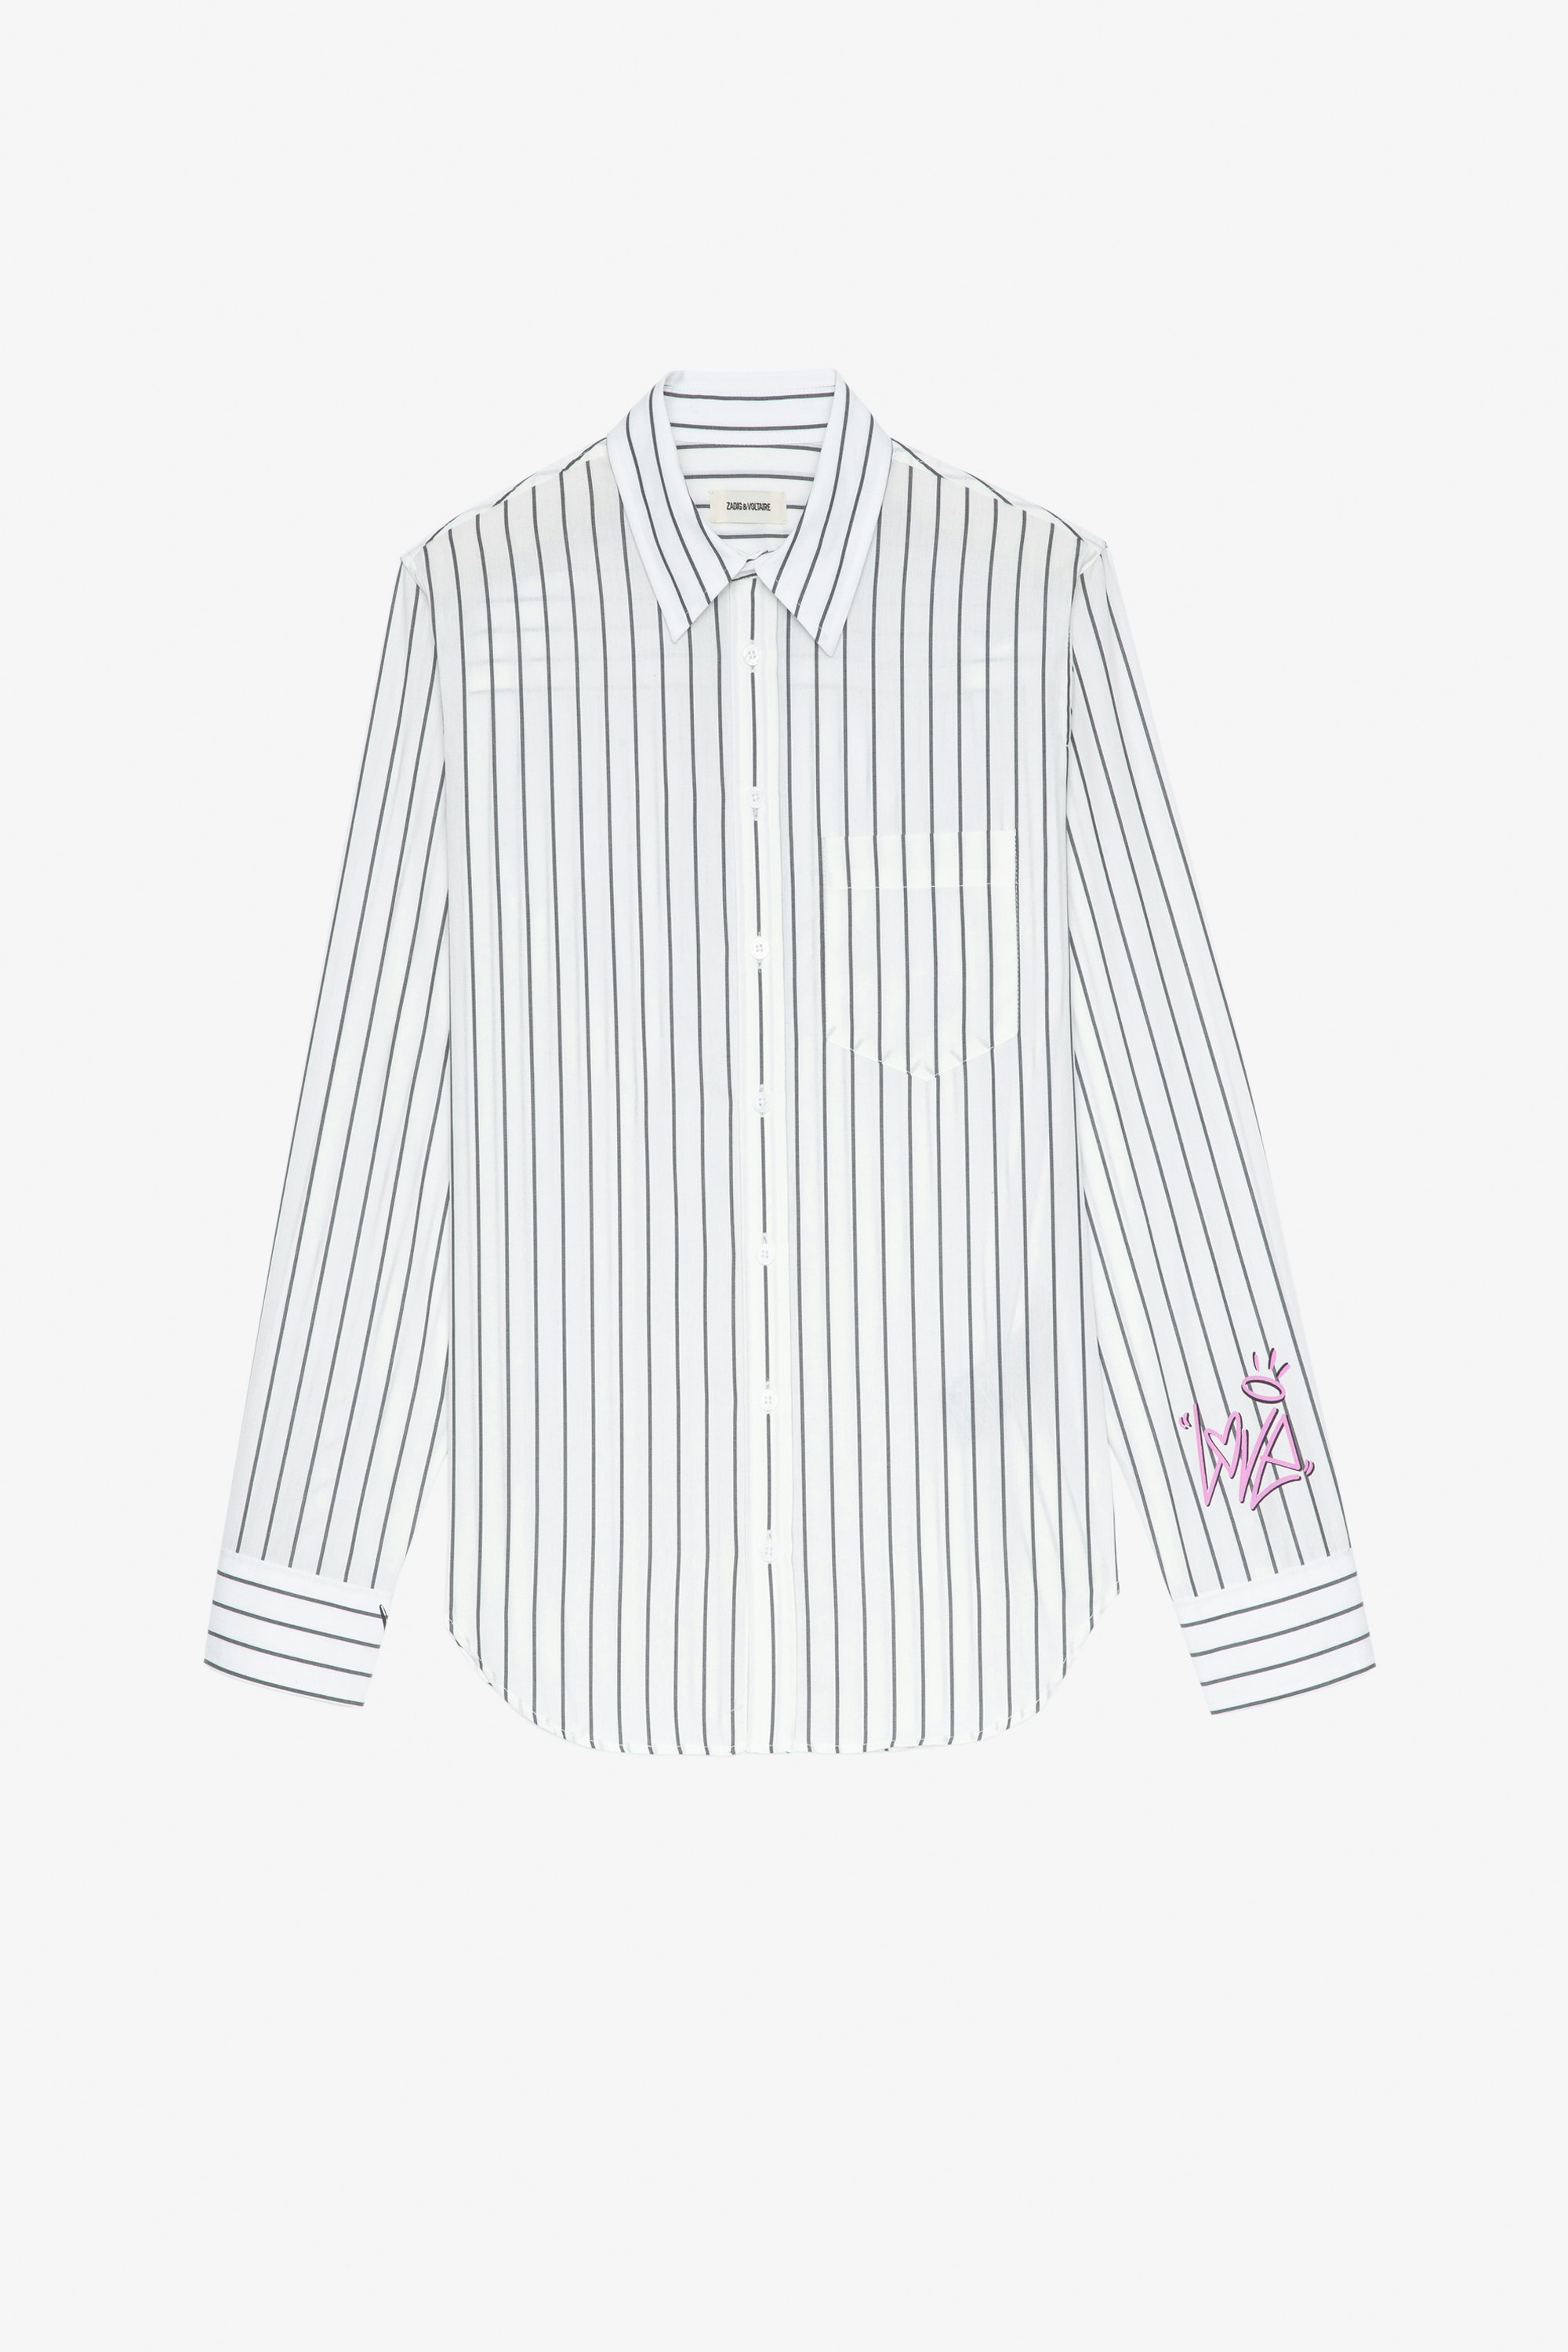 Taski Shirt Women's white striped cotton shirt with motifs